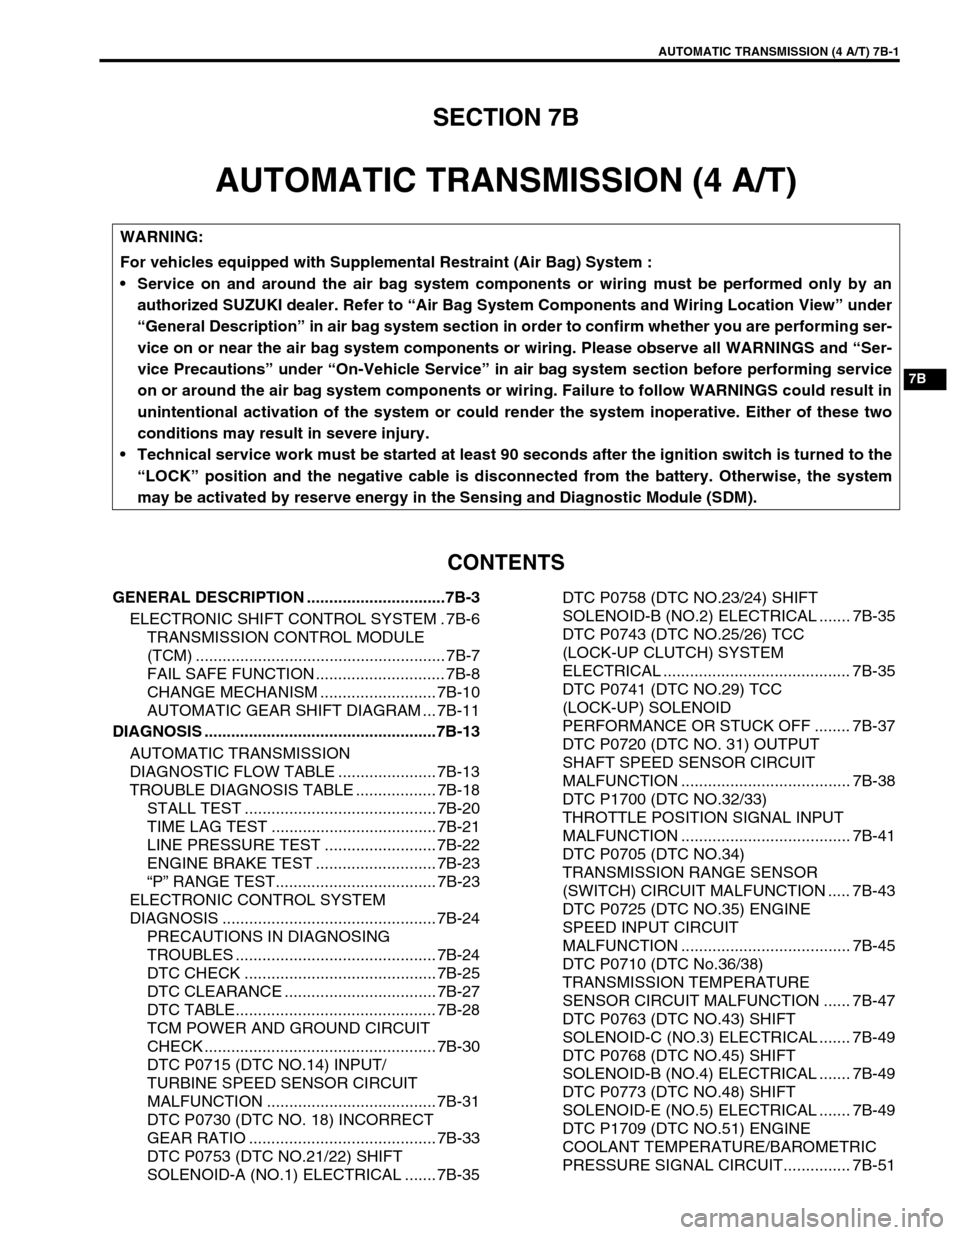 SUZUKI SWIFT 2000 1.G Transmission Service Workshop Manual AUTOMATIC TRANSMISSION (4 A/T) 7B-1
6F1
6F2
6G
6H
6K
7A
7A1
7C1
7D
7B
7F
8A
8B
8C
8D
8E
9
10
10A
10B
SECTION 7B
AUTOMATIC TRANSMISSION (4 A/T)
CONTENTS
GENERAL DESCRIPTION ............................